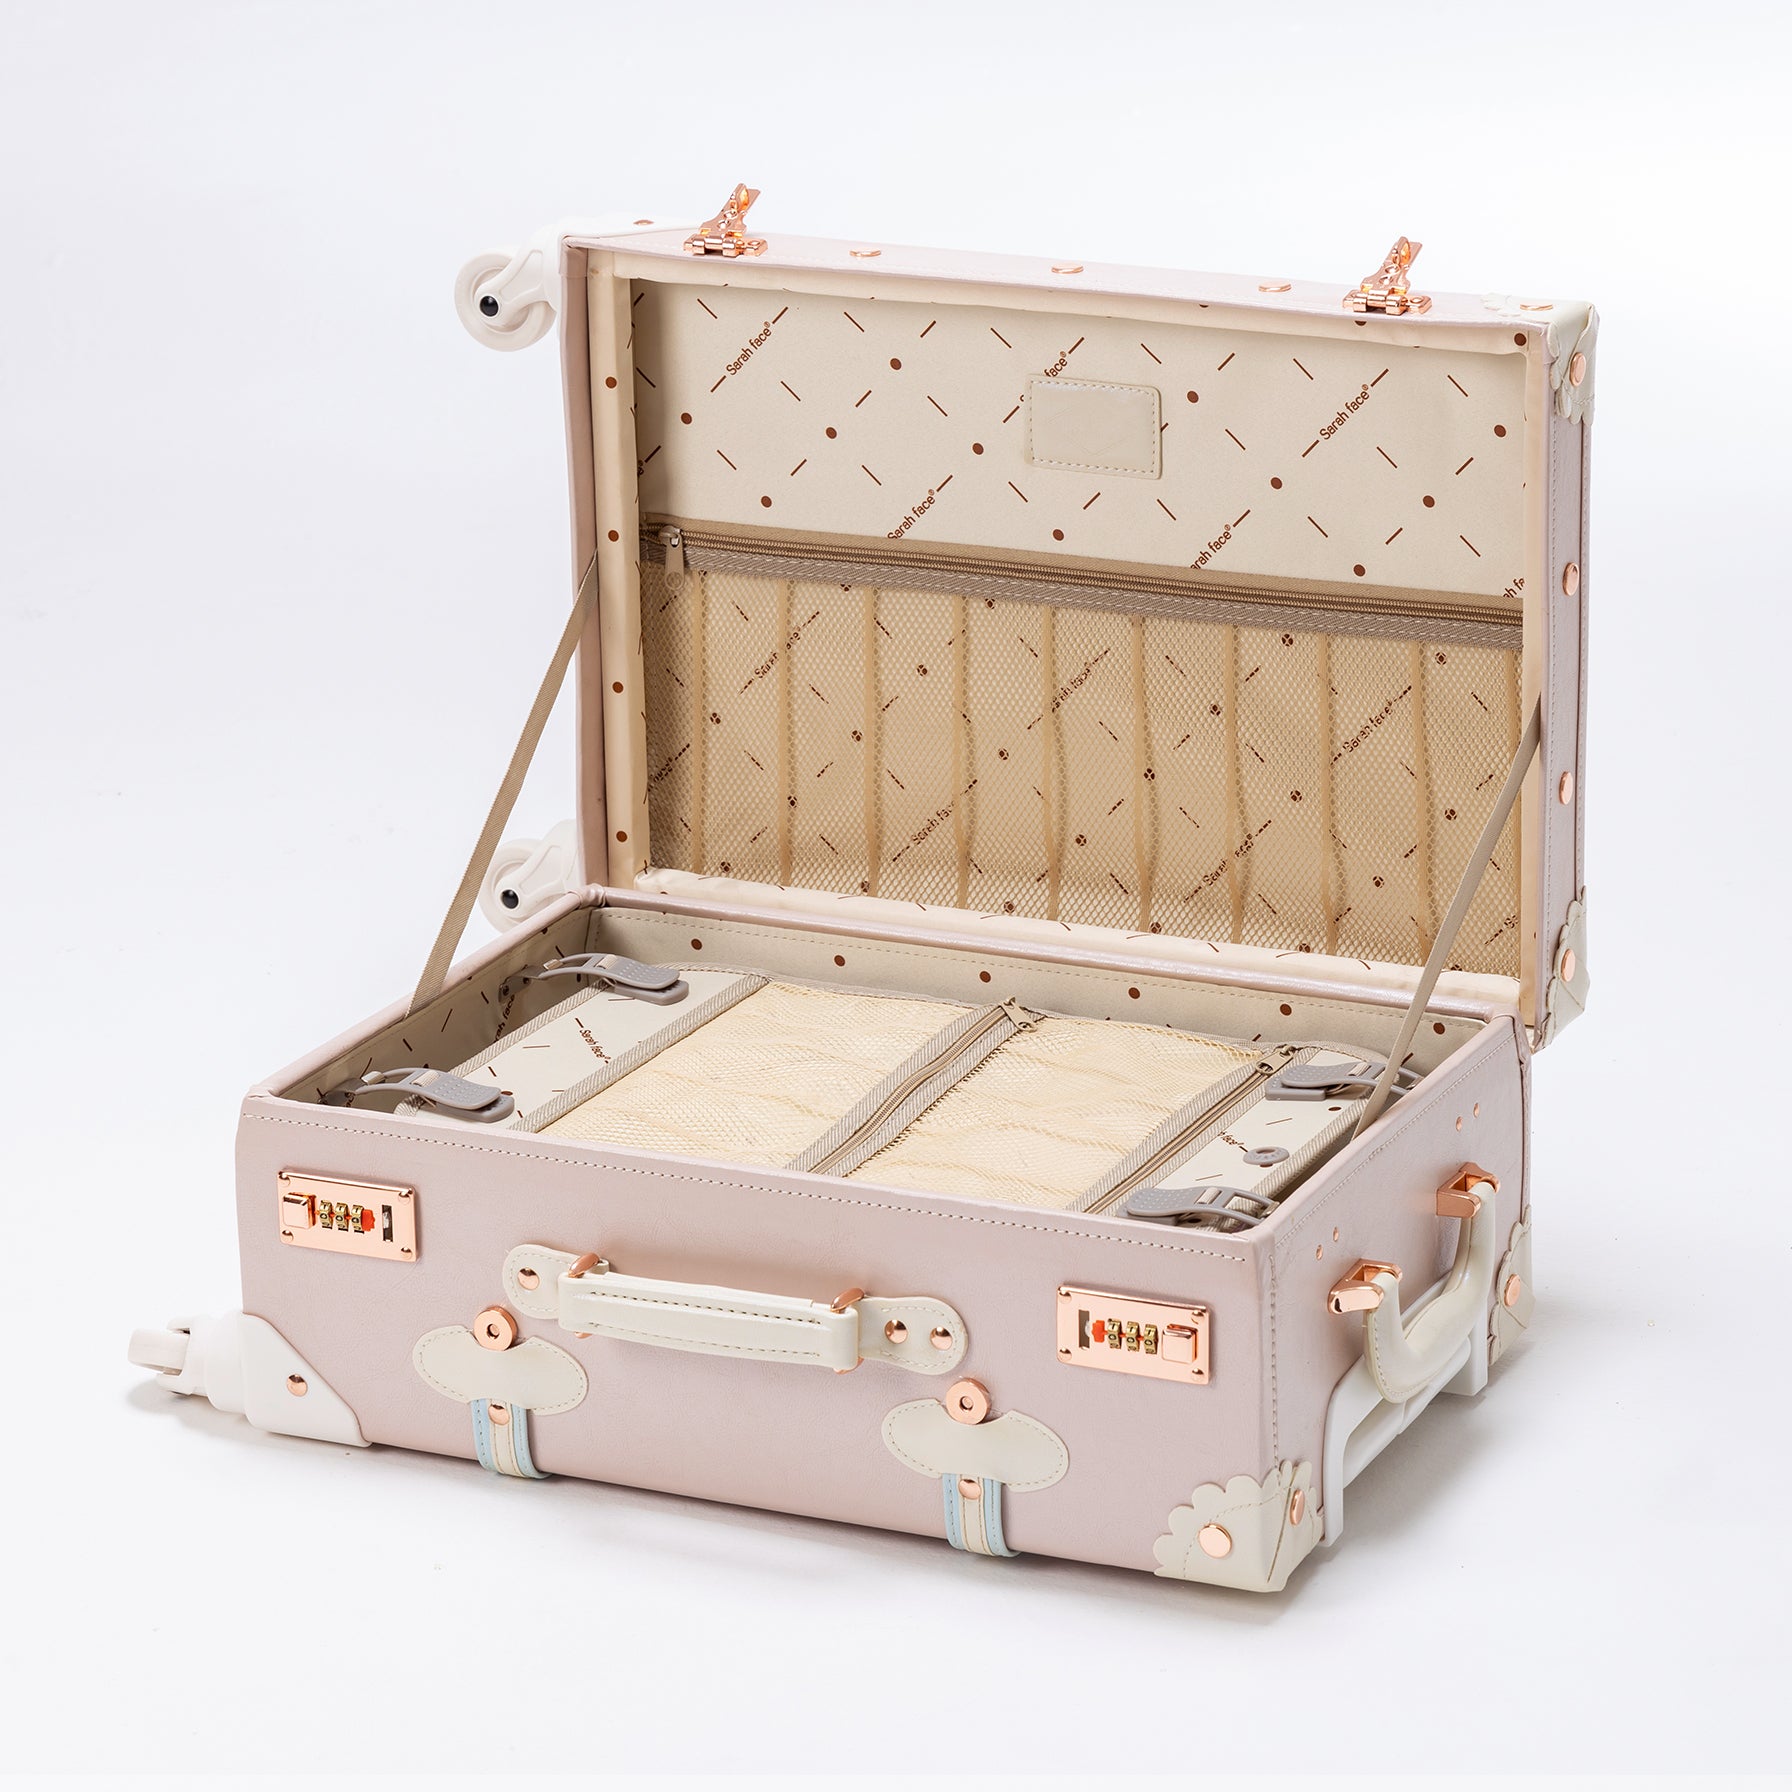 SarahFace 2 Pieces Luggage Set - Cherry Pink's